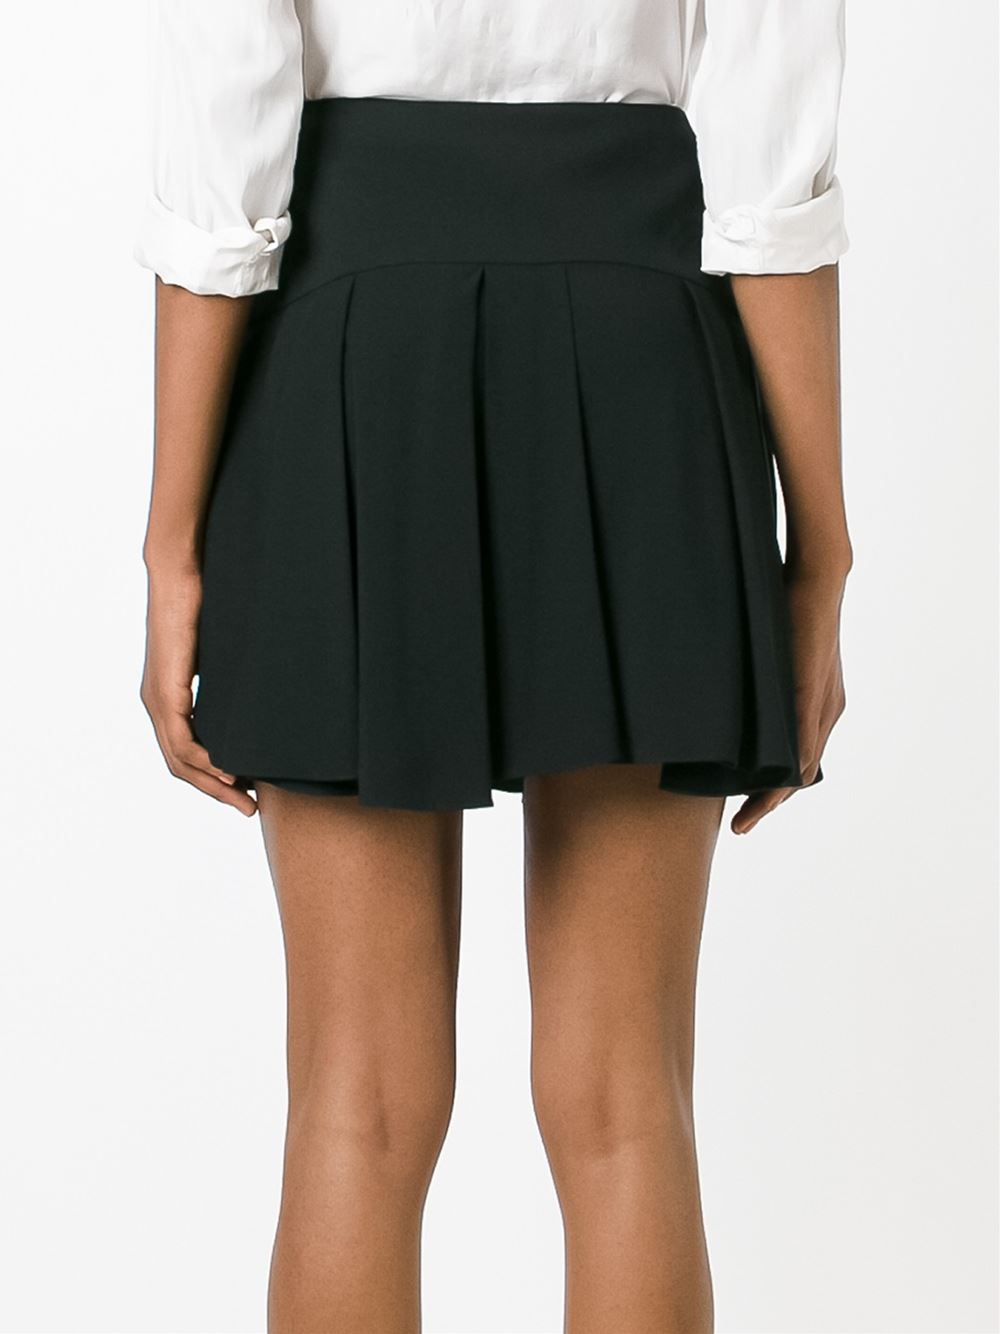 Lyst - Saint Laurent Pleated Mini Skirt in Black